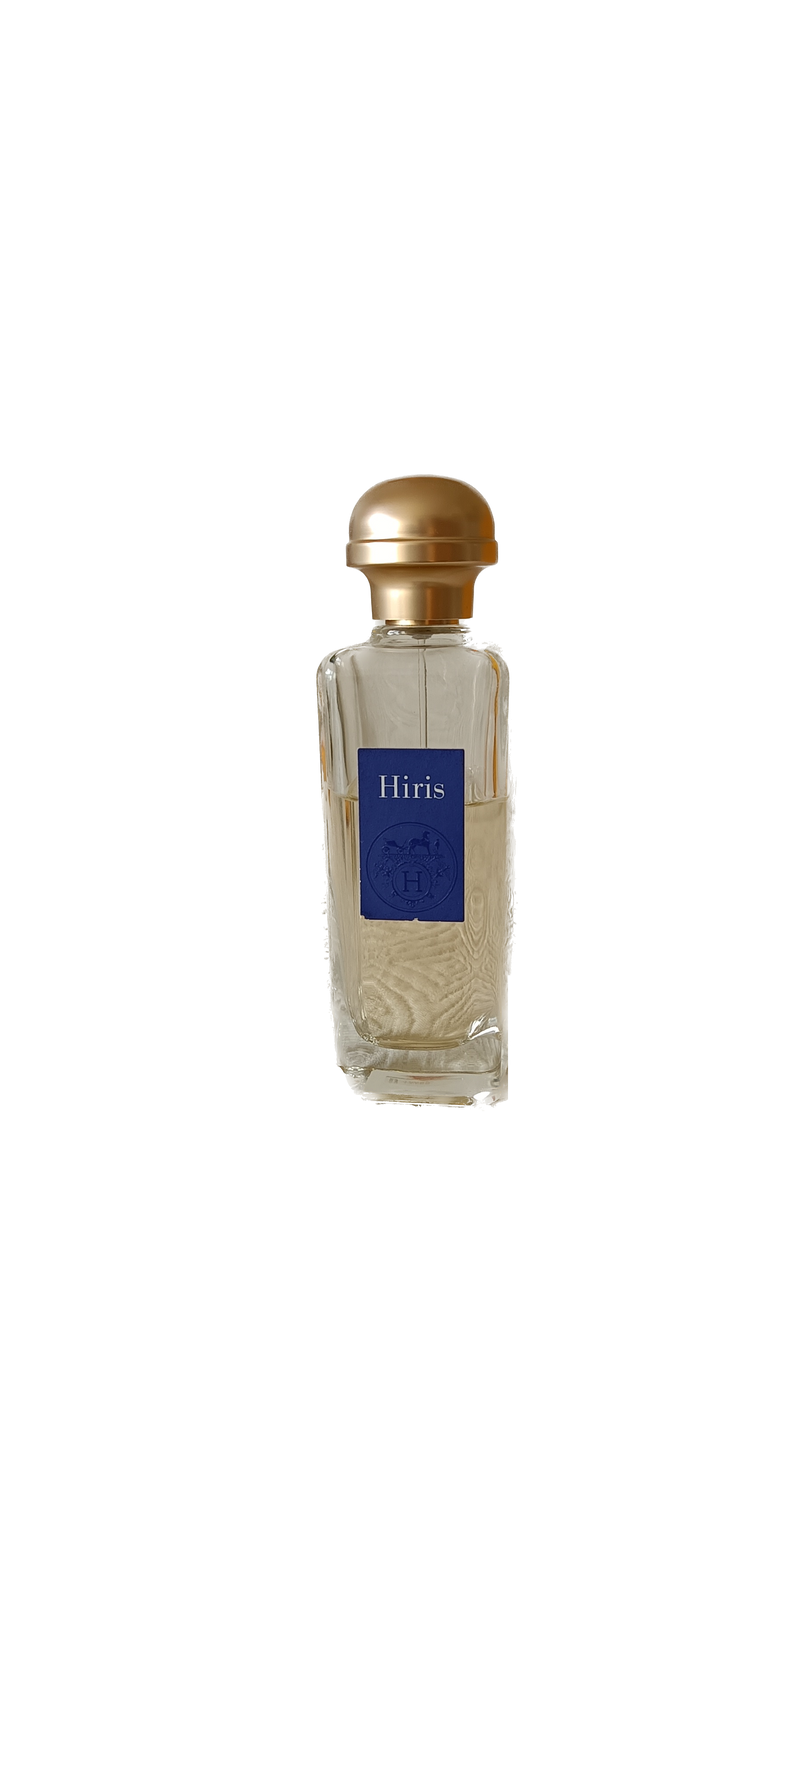 Hiris - Hermès - Eau de toilette - 75/100ml